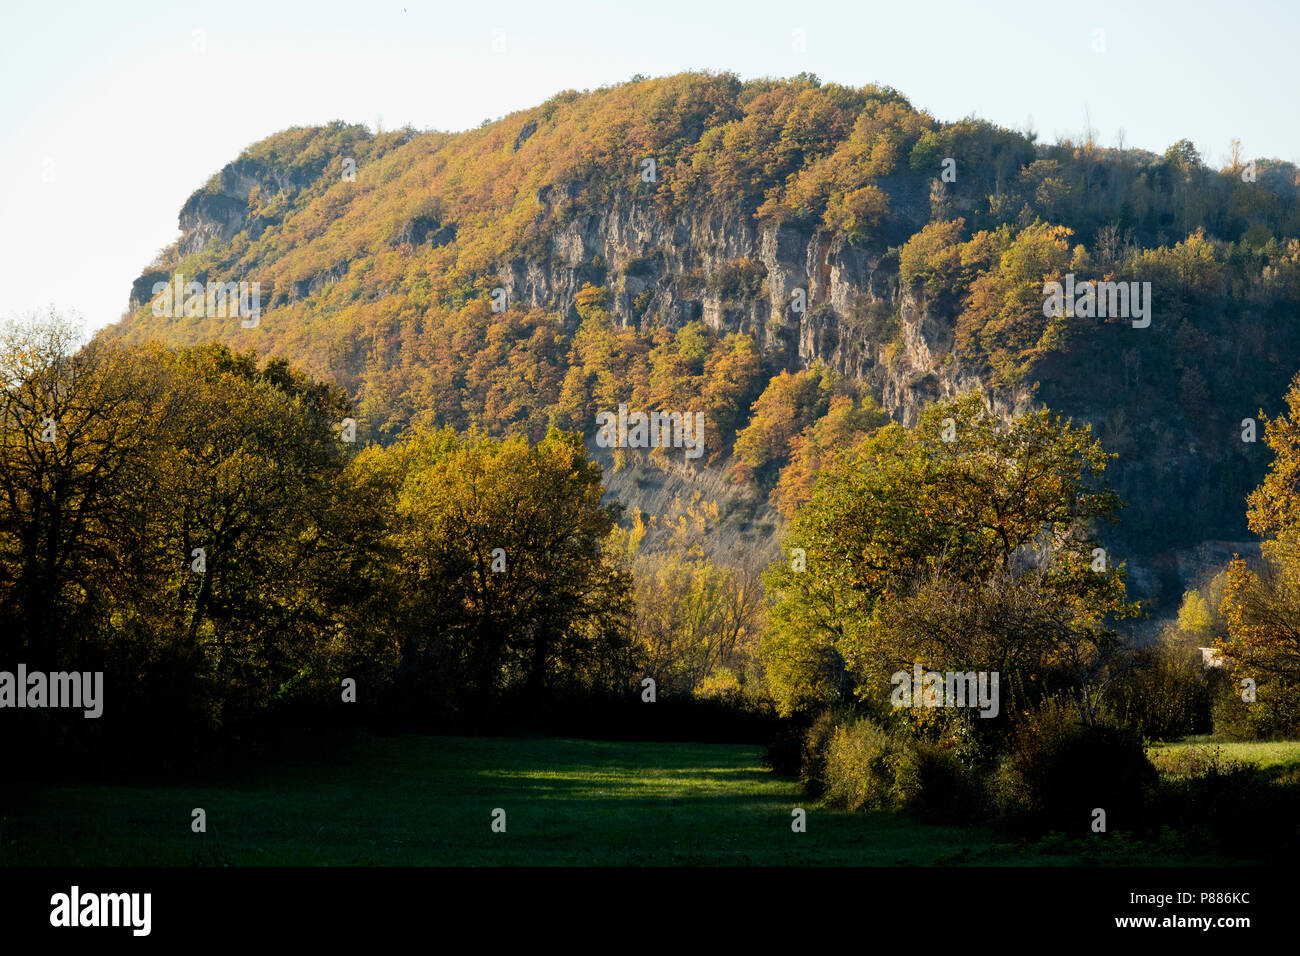 The cliffs at Lexos, a hamlet forming part of the commune of Varen, Tarn et Garonne, Occitanie, France, in the Ayeyron valley. Stock Photo